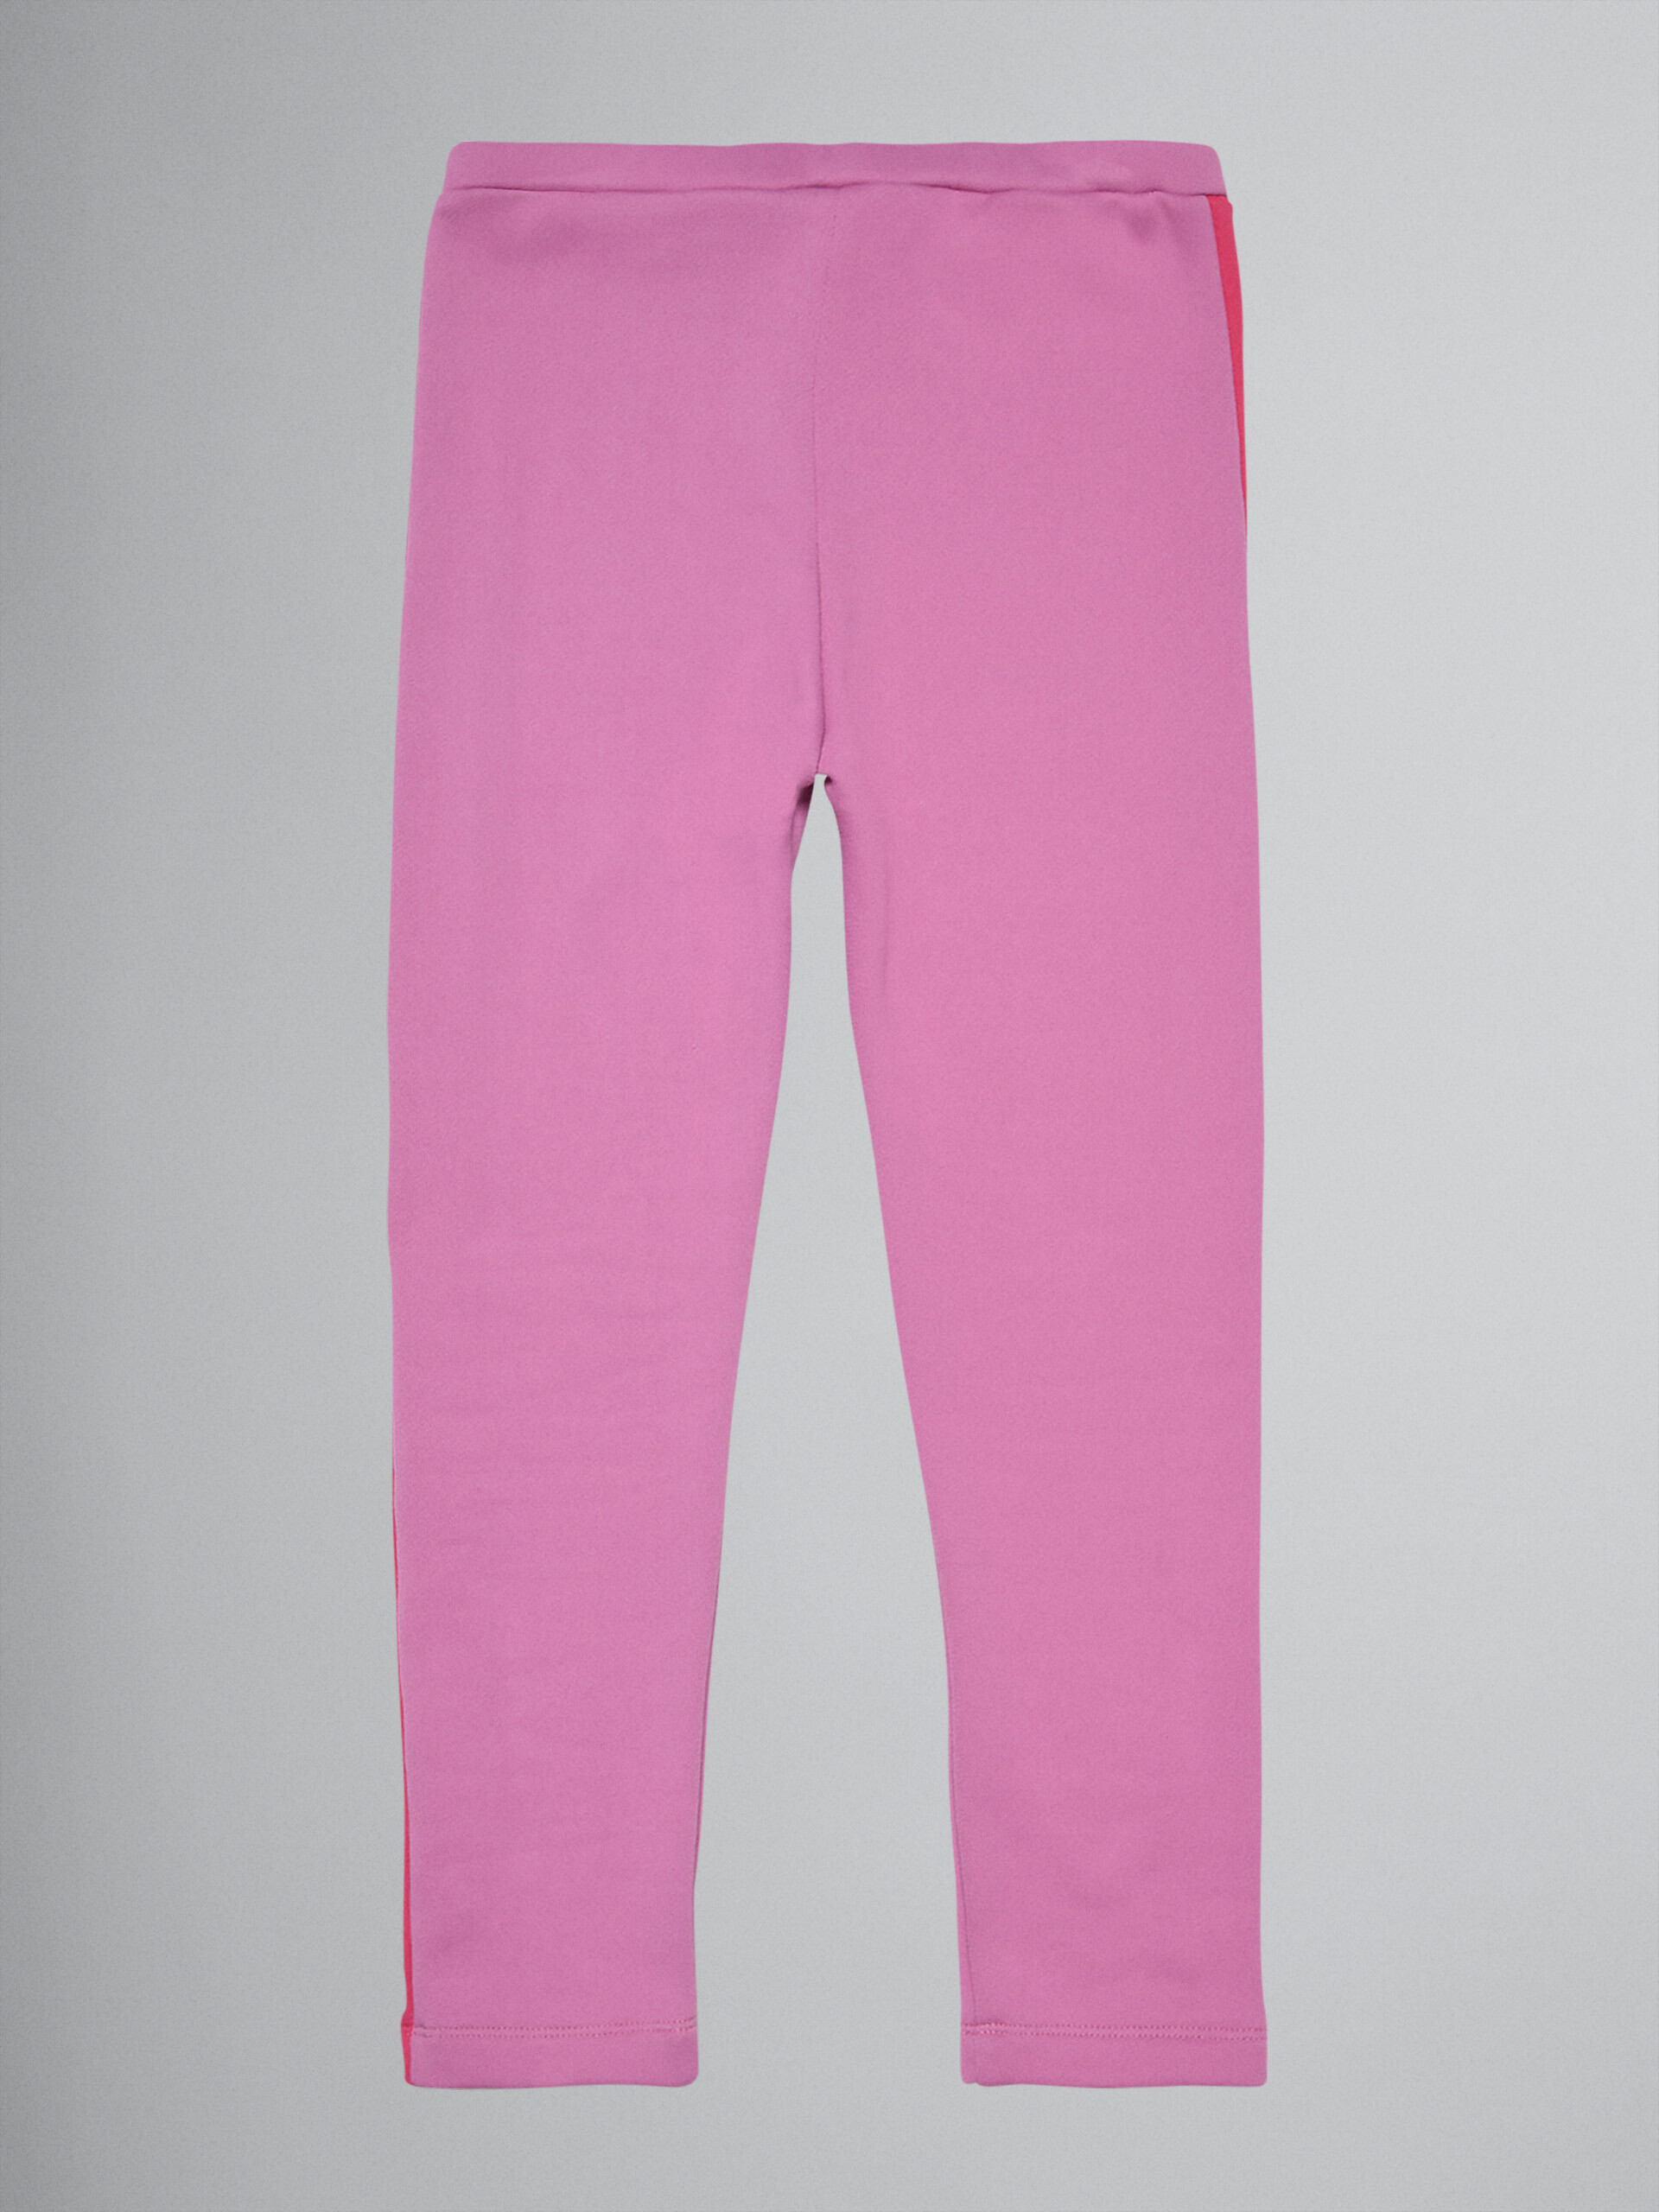 Pink technical cotton track pants - Pants - Image 2